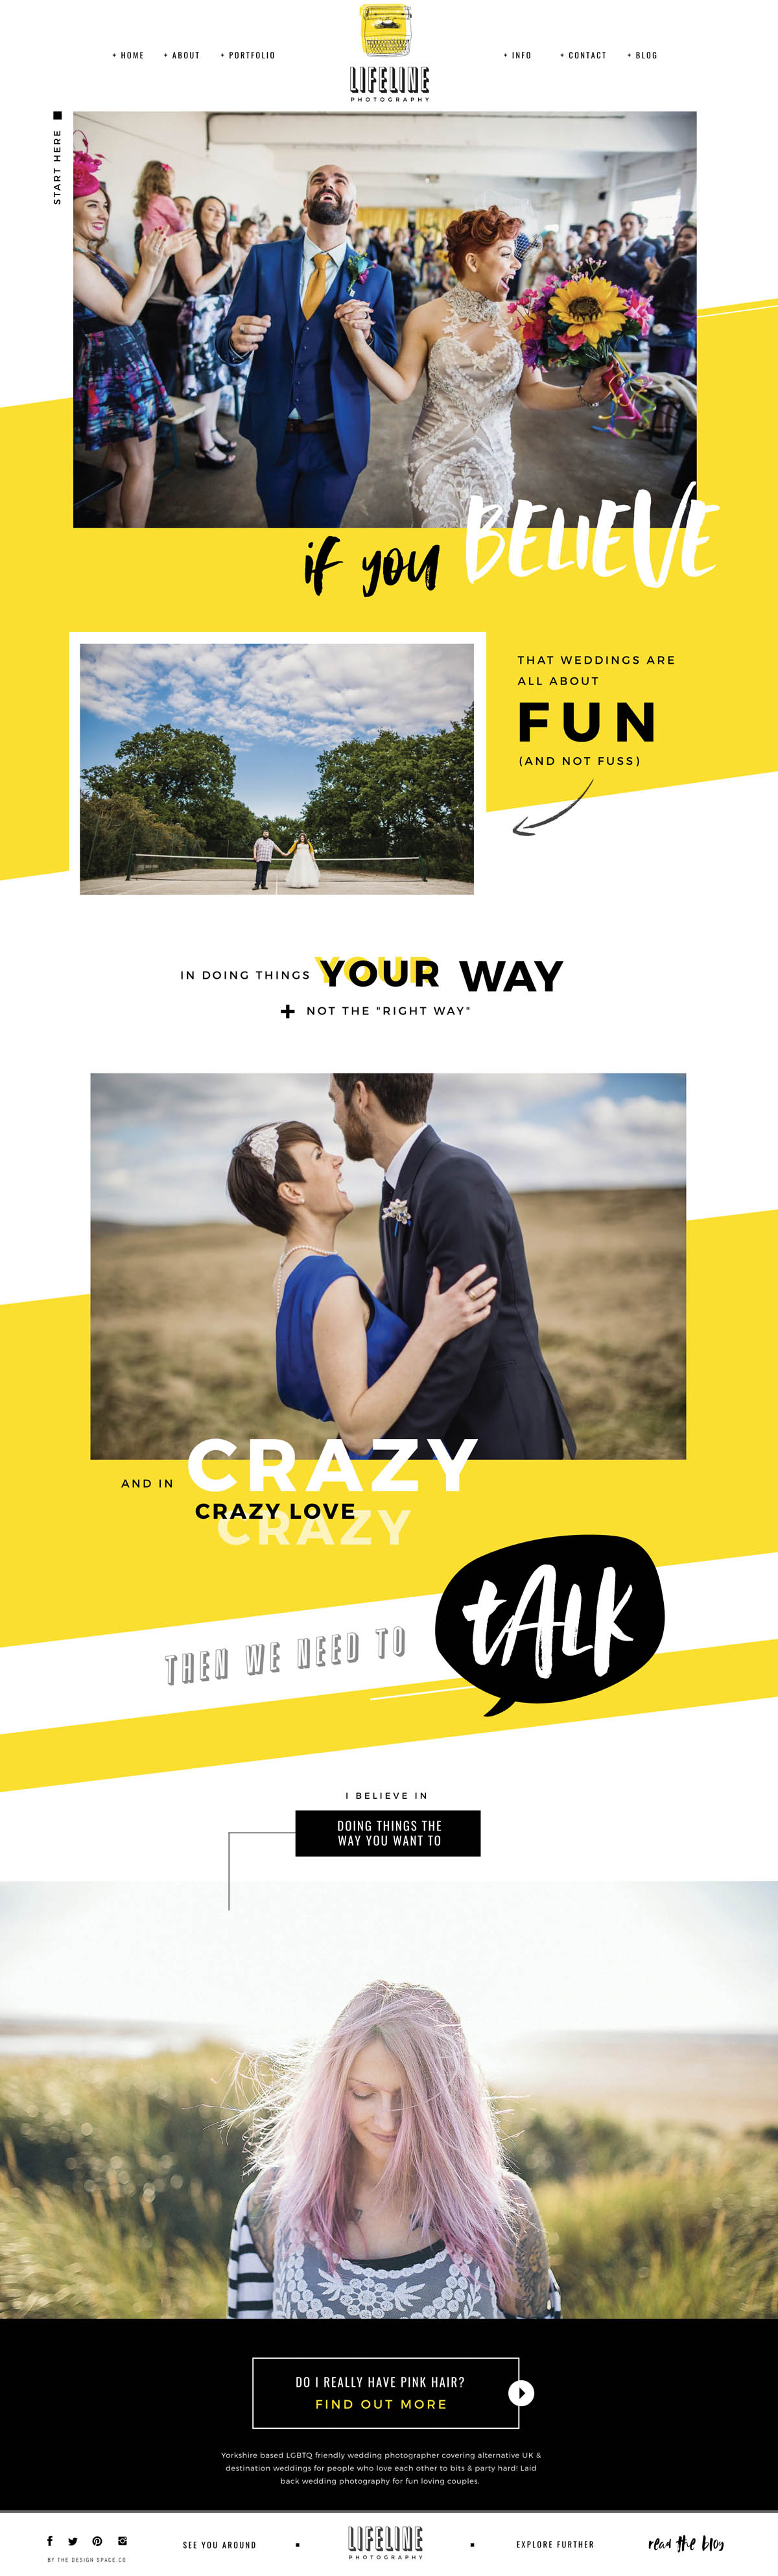 Wedding Photography Website Design 